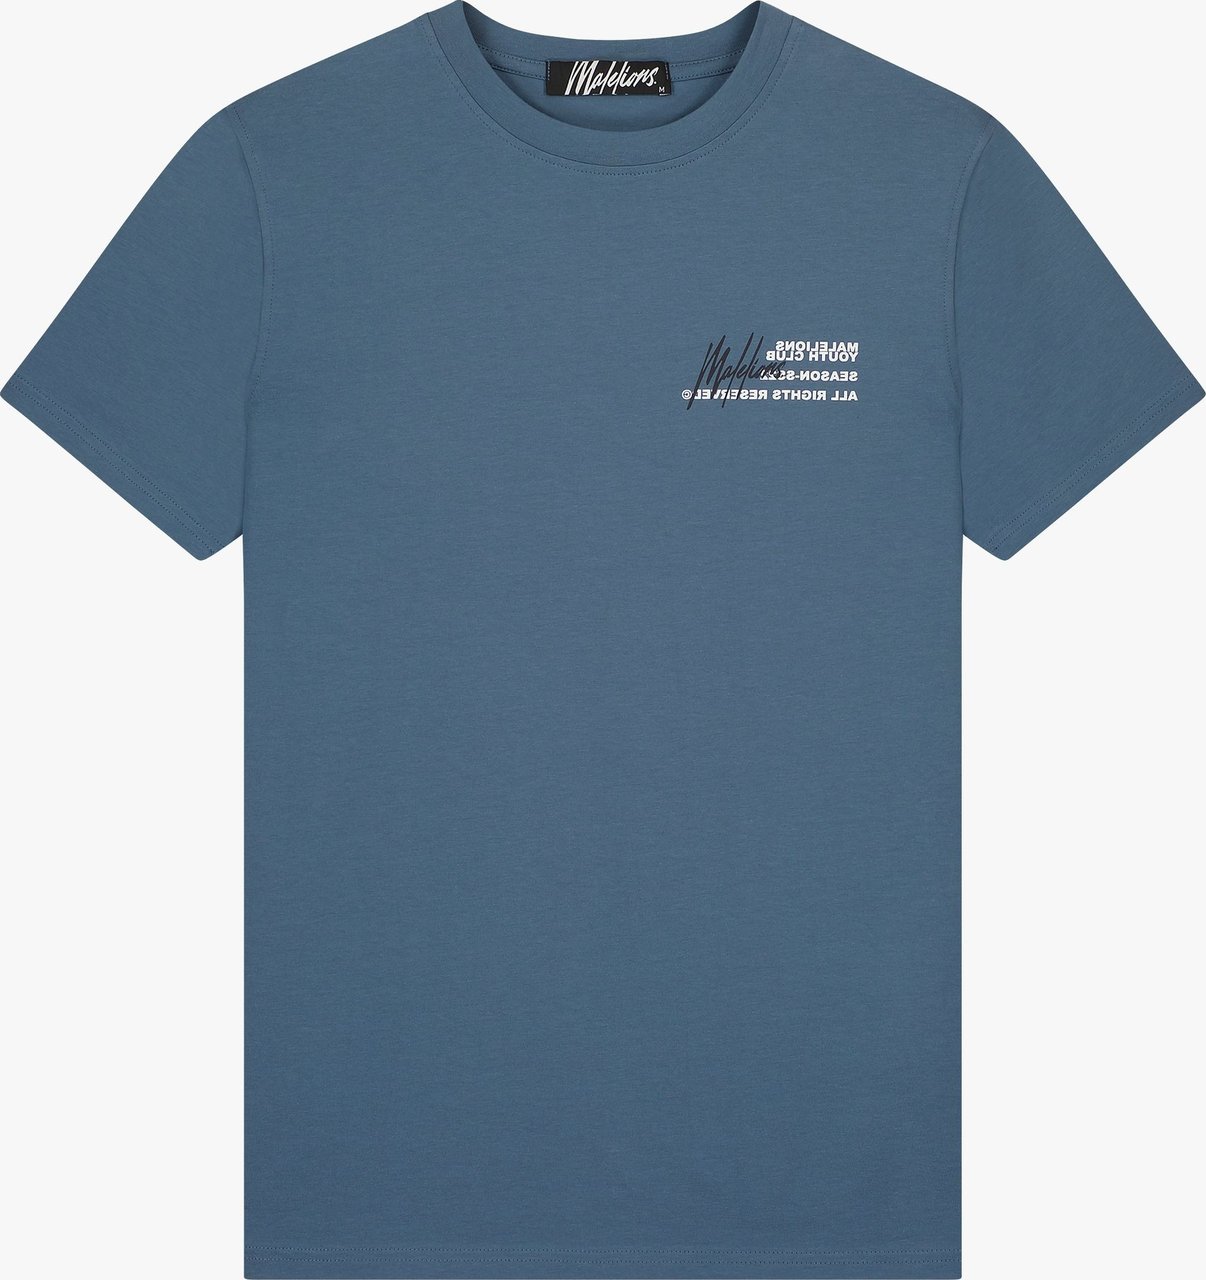 Malelions Men Youth Club T-Shirt - Blue/White Blauw